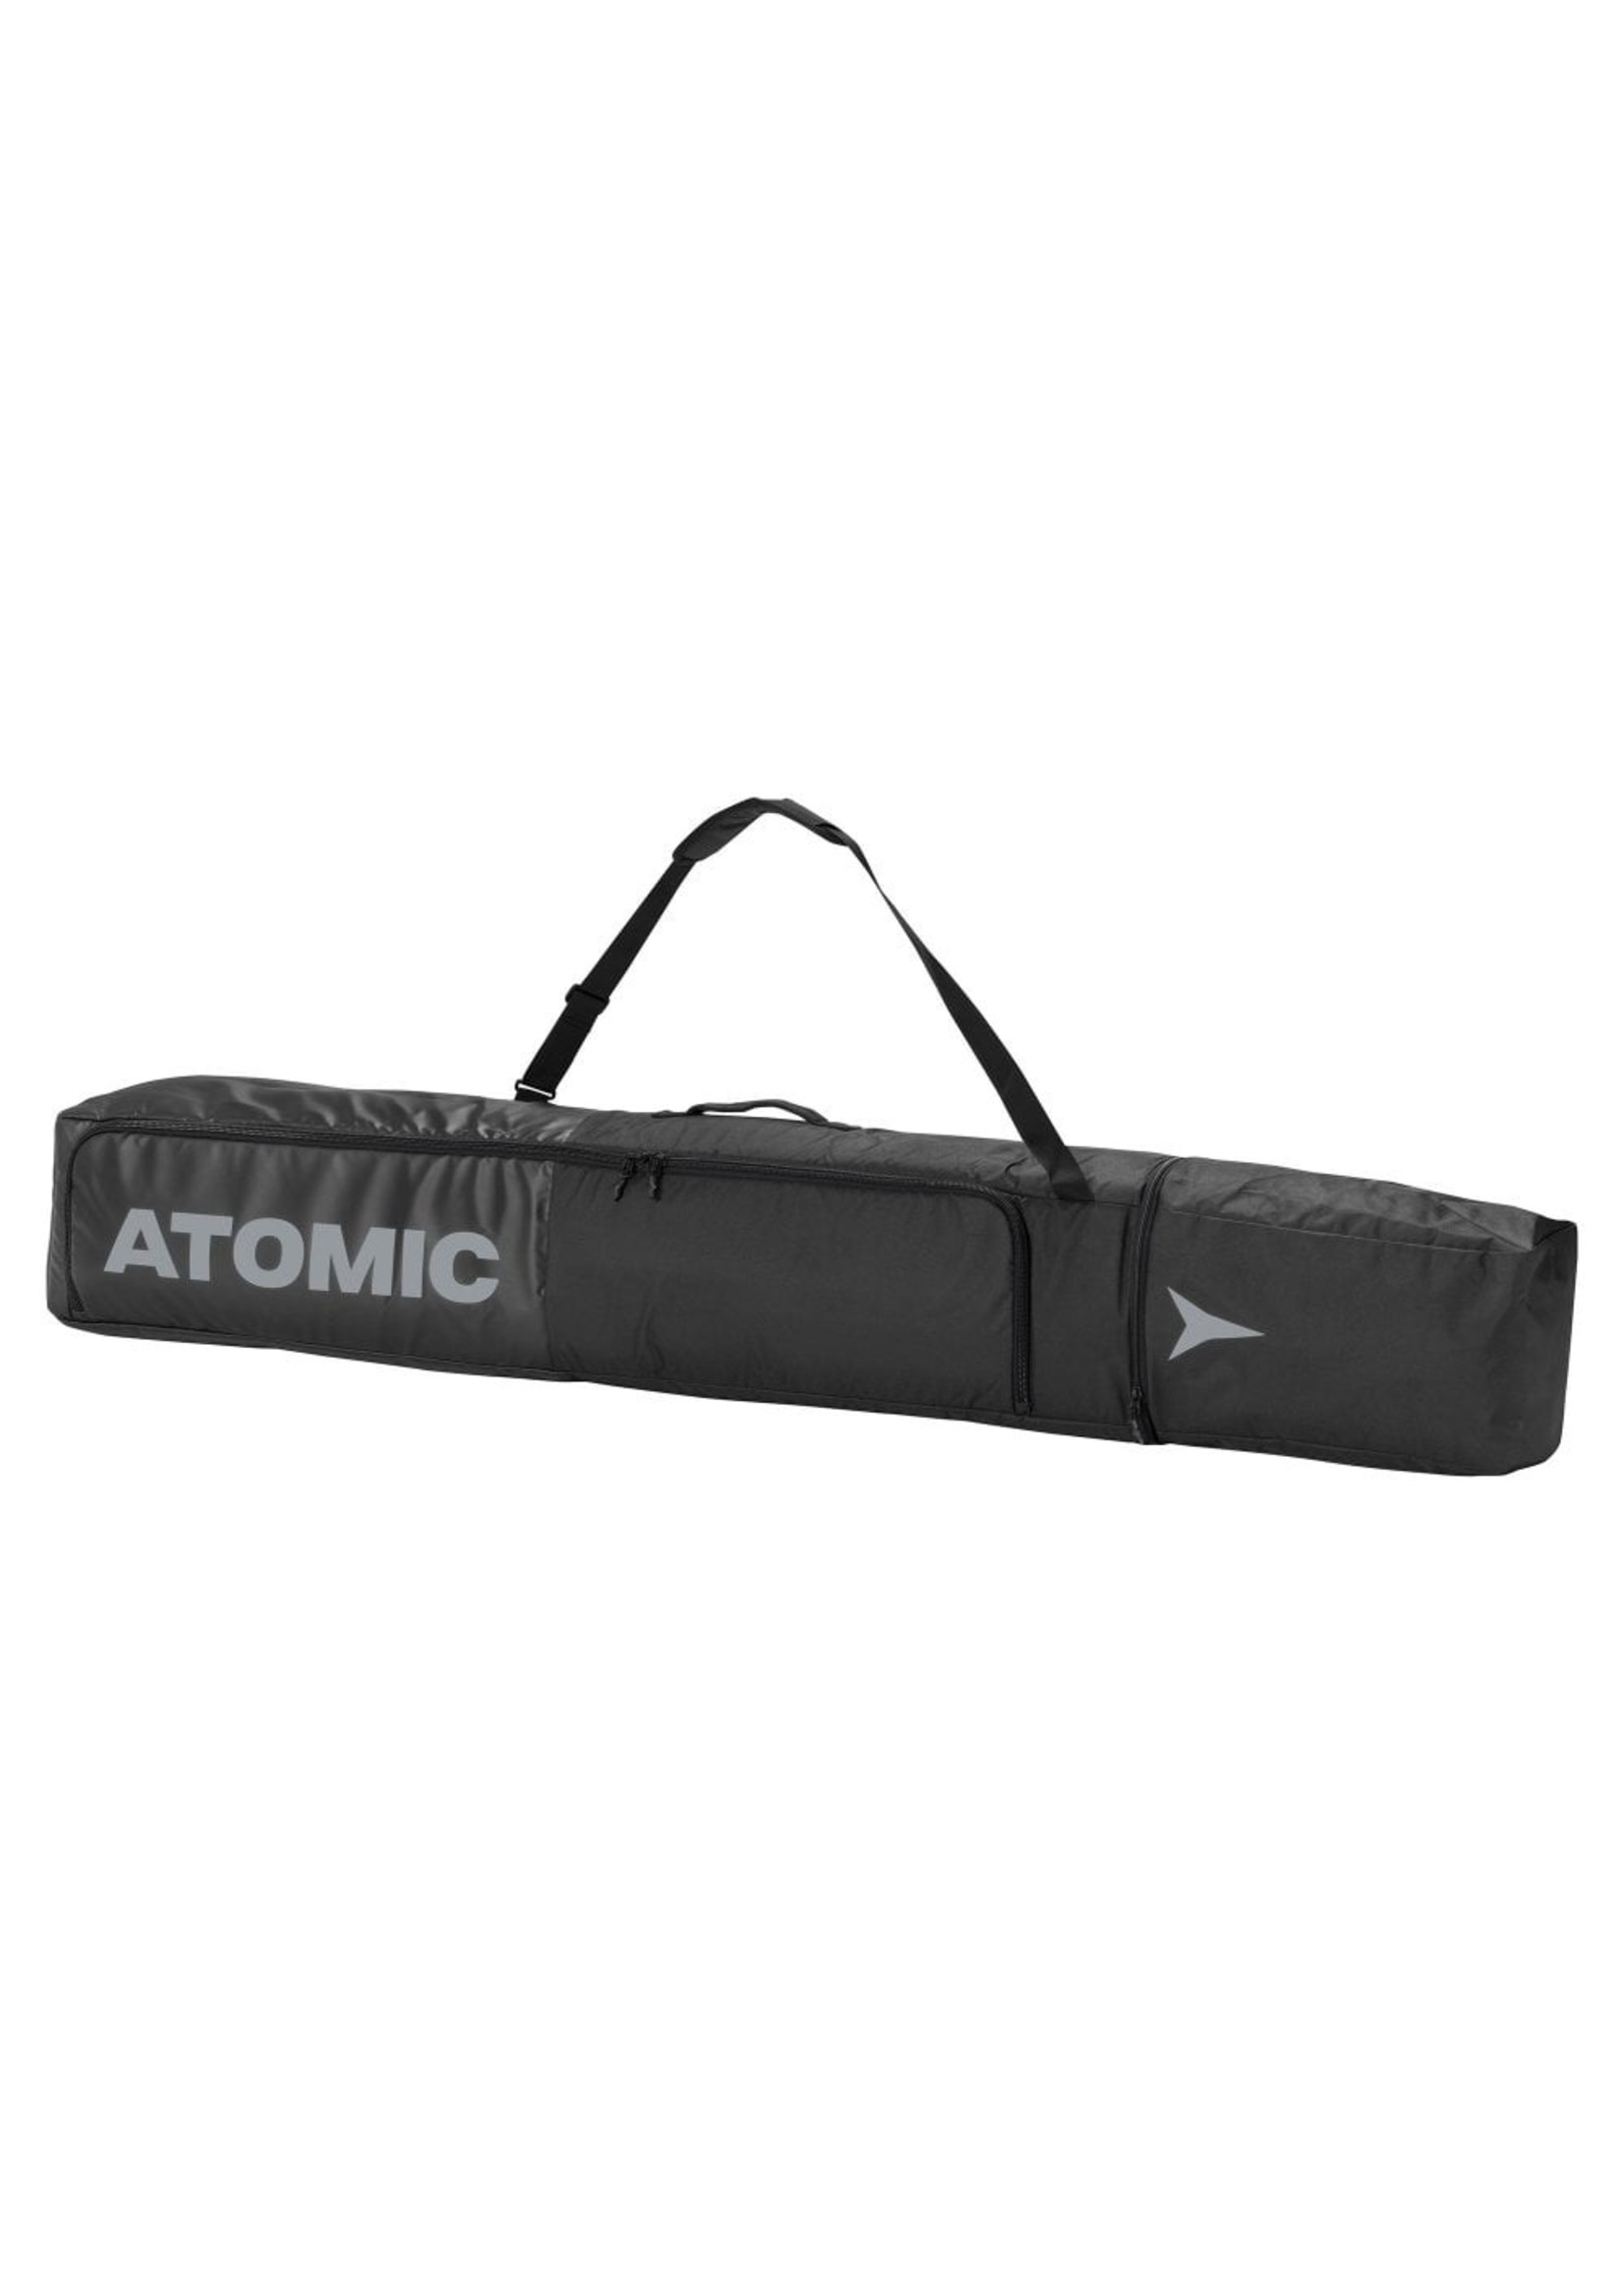 ATOMIC DOUBLE SKI BAG Black/Grey